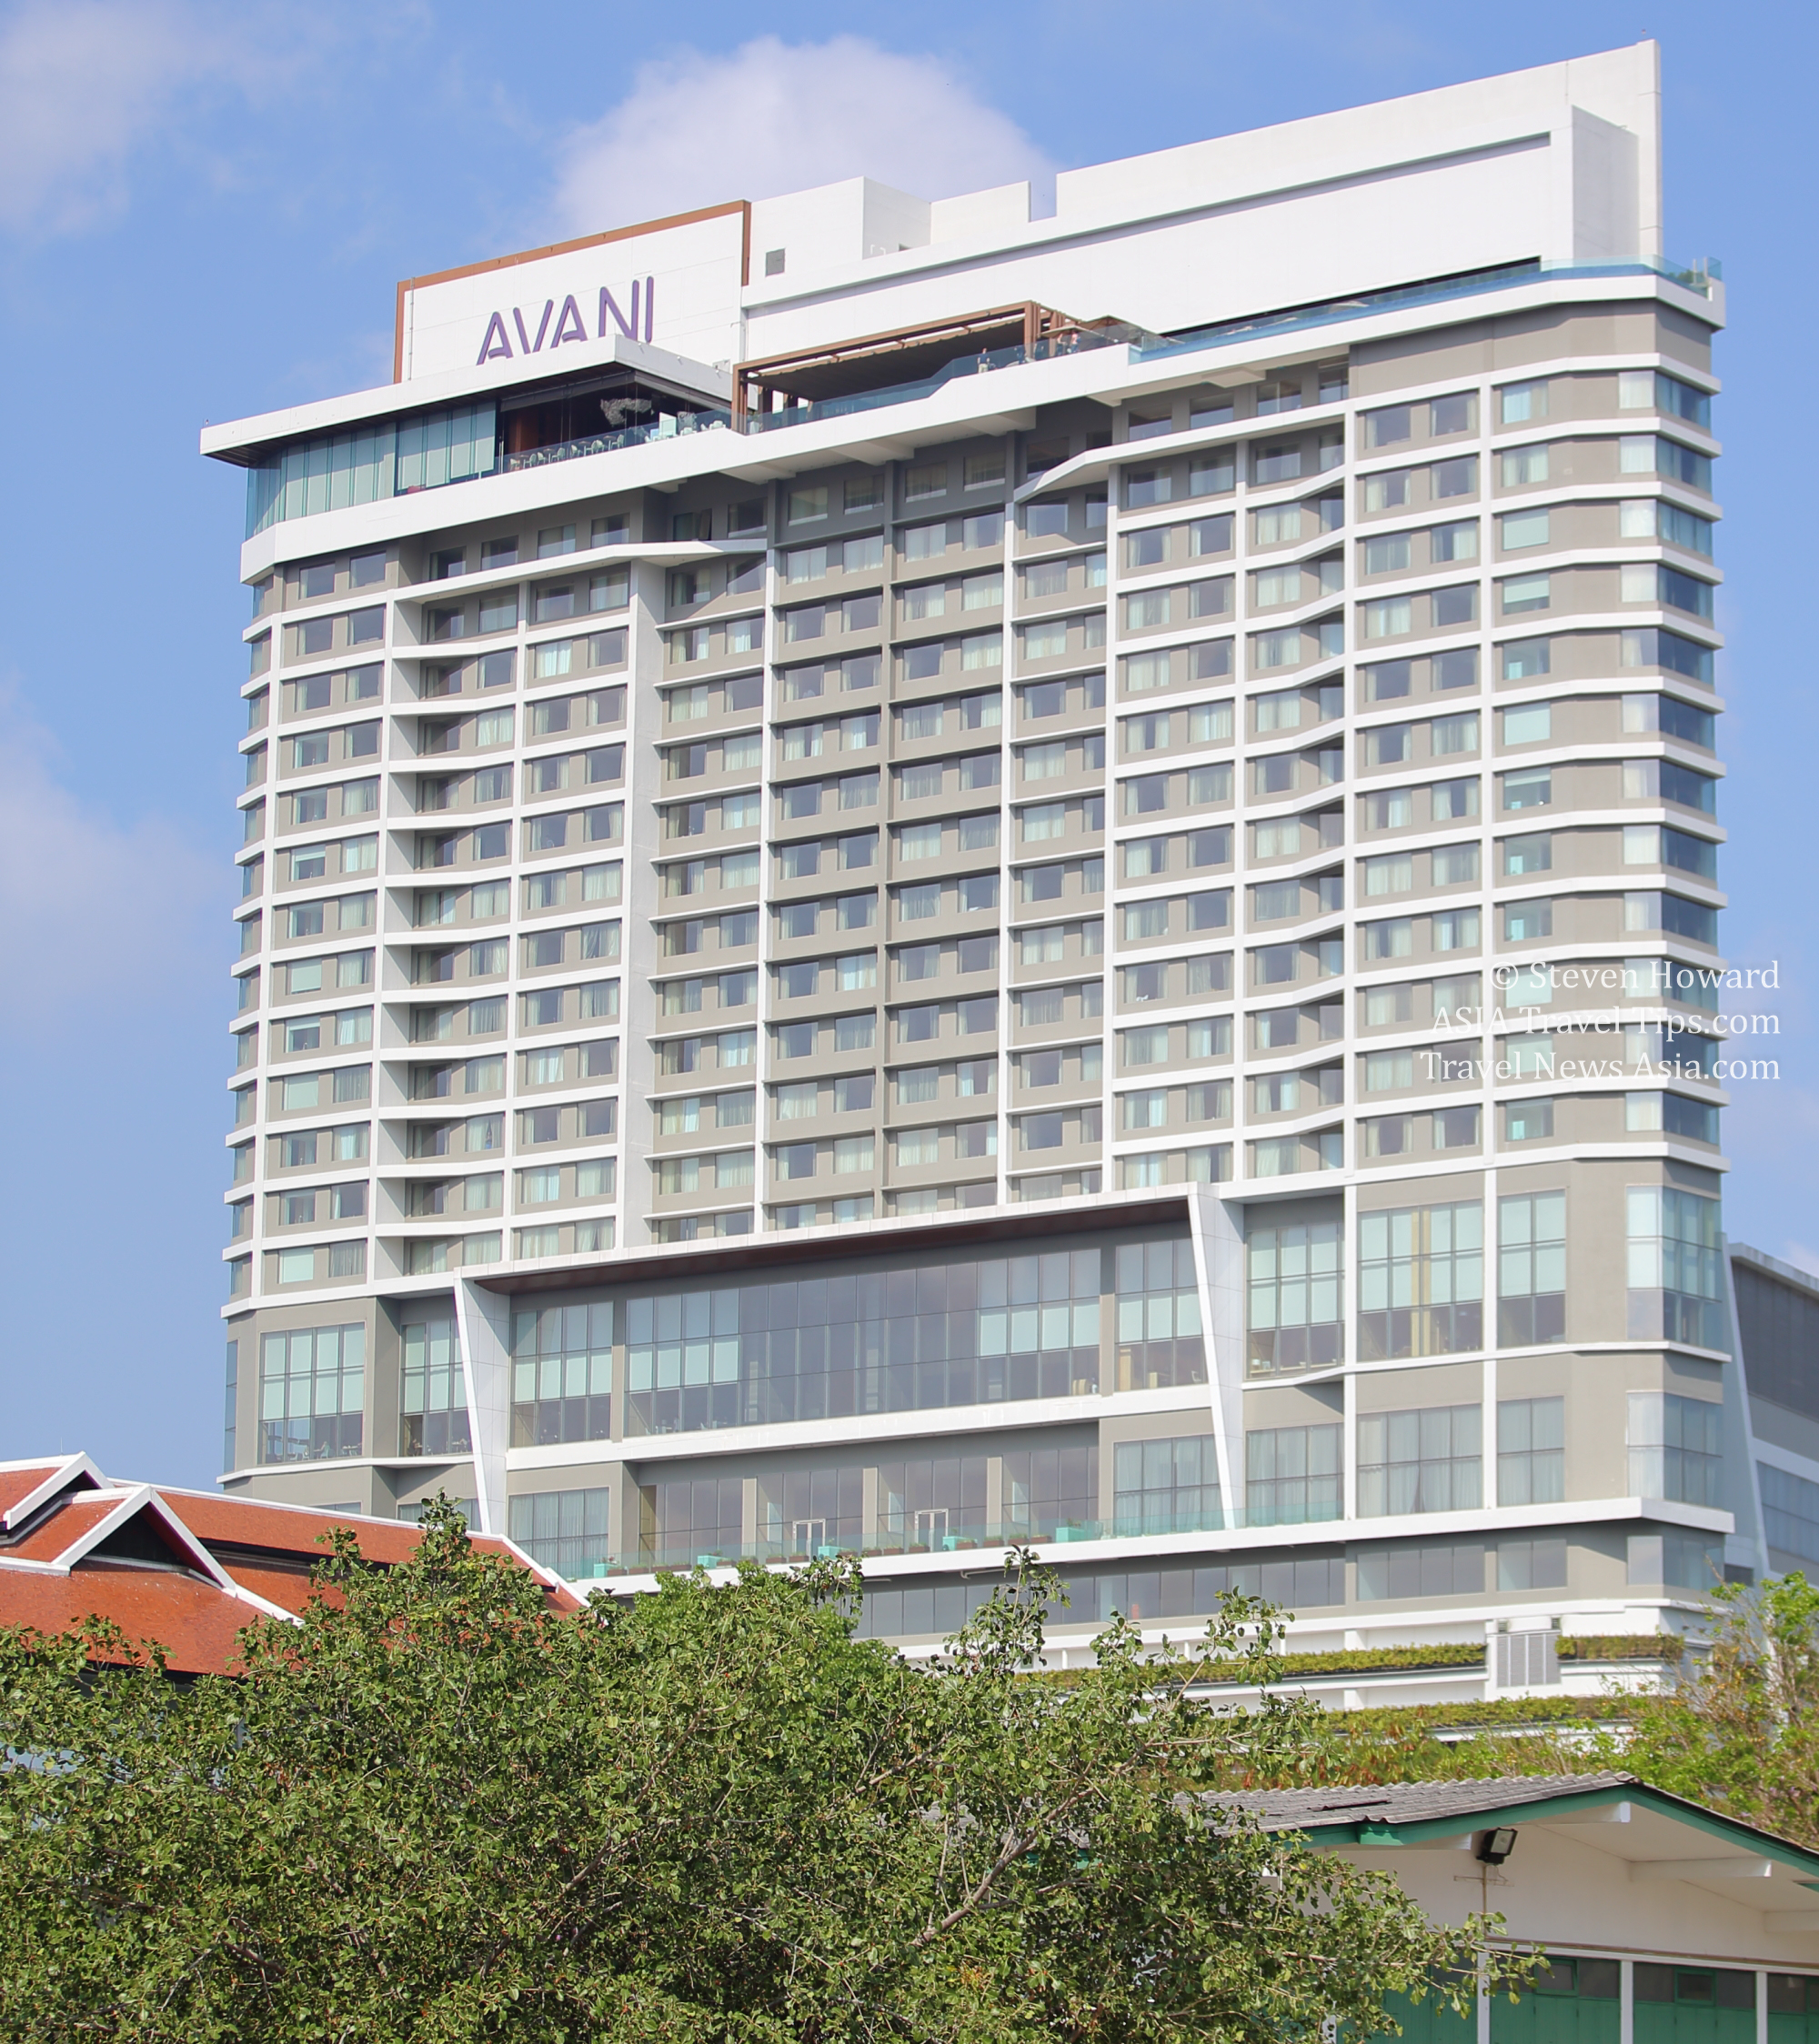 Avani Riverside Hotel in Bangkok, Thailand